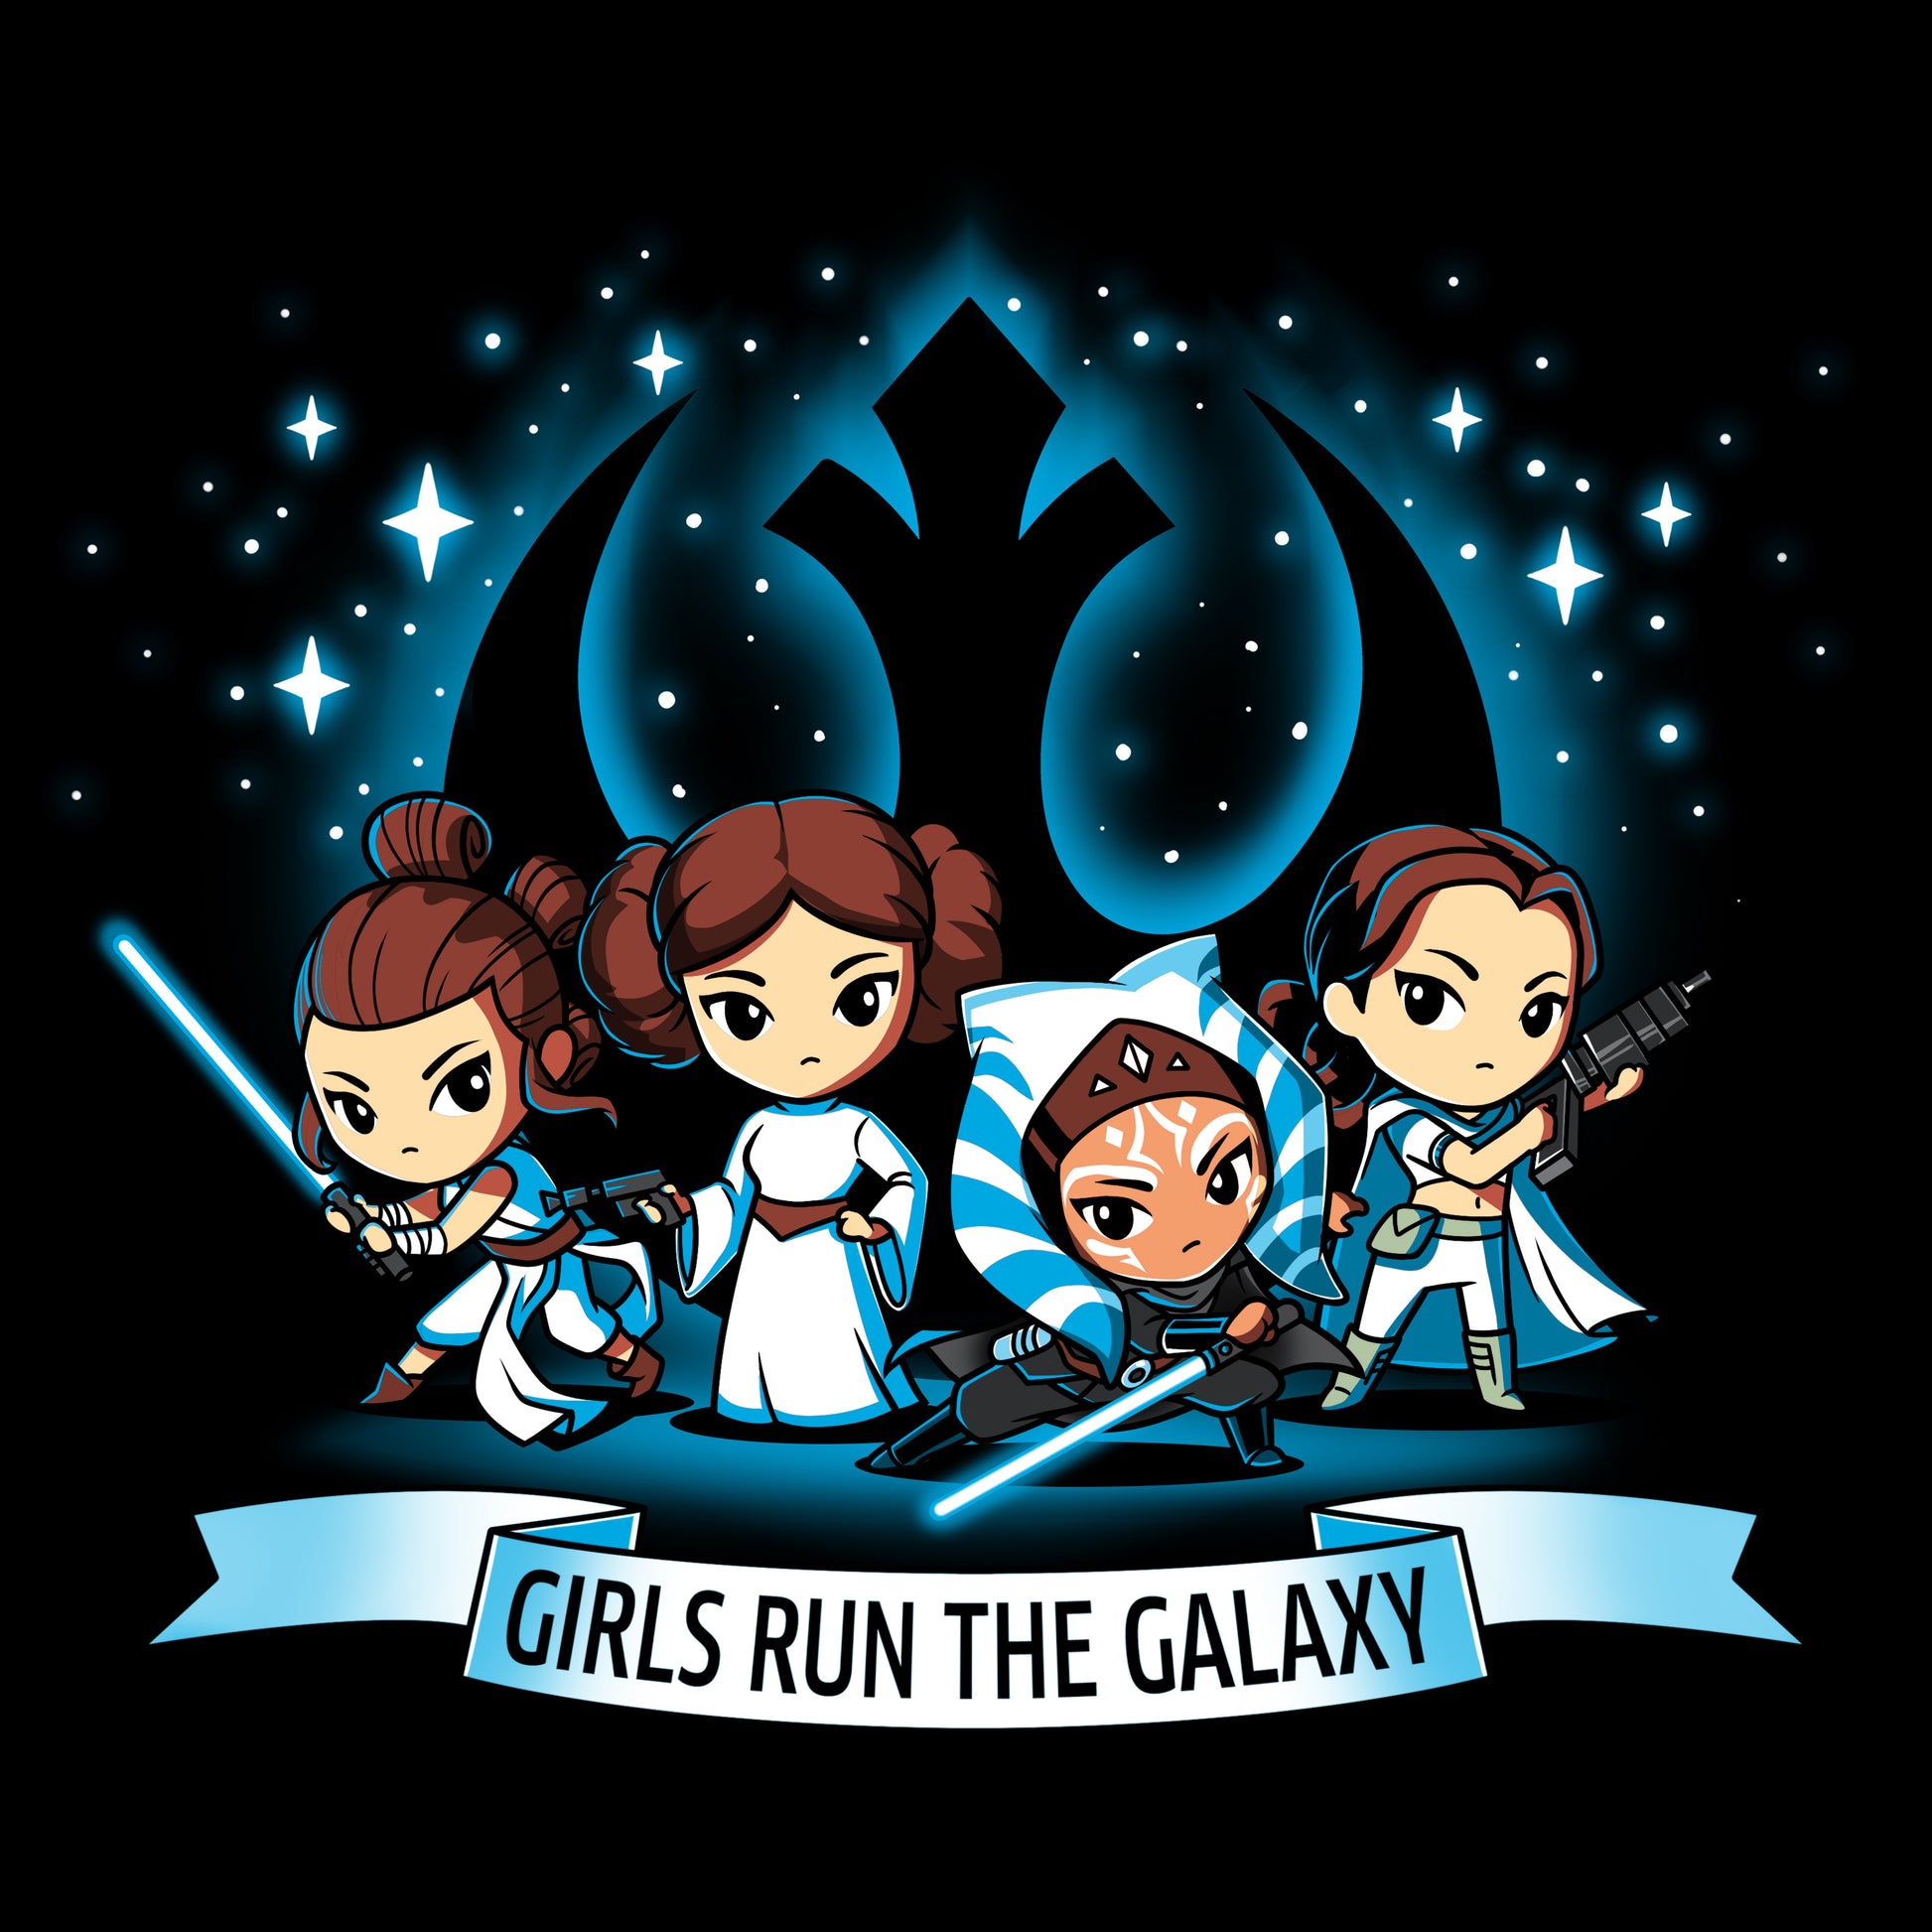 Collectible Girls Run The Galaxy t-shirt, licensed Star Wars merchandise.